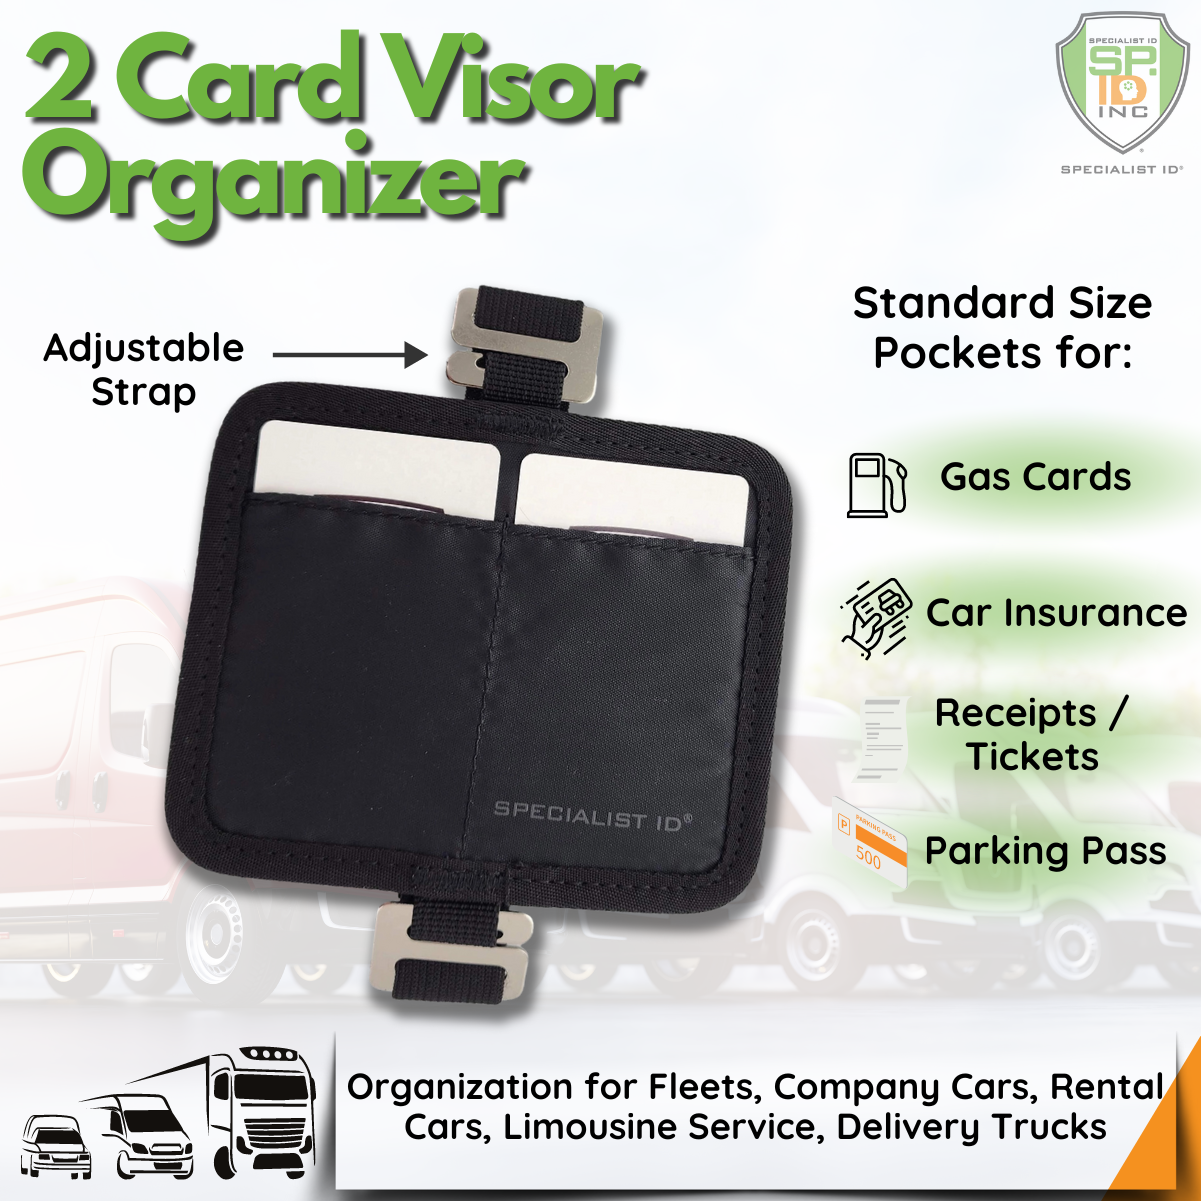 2 Card Visor Organizer for standard sized cards